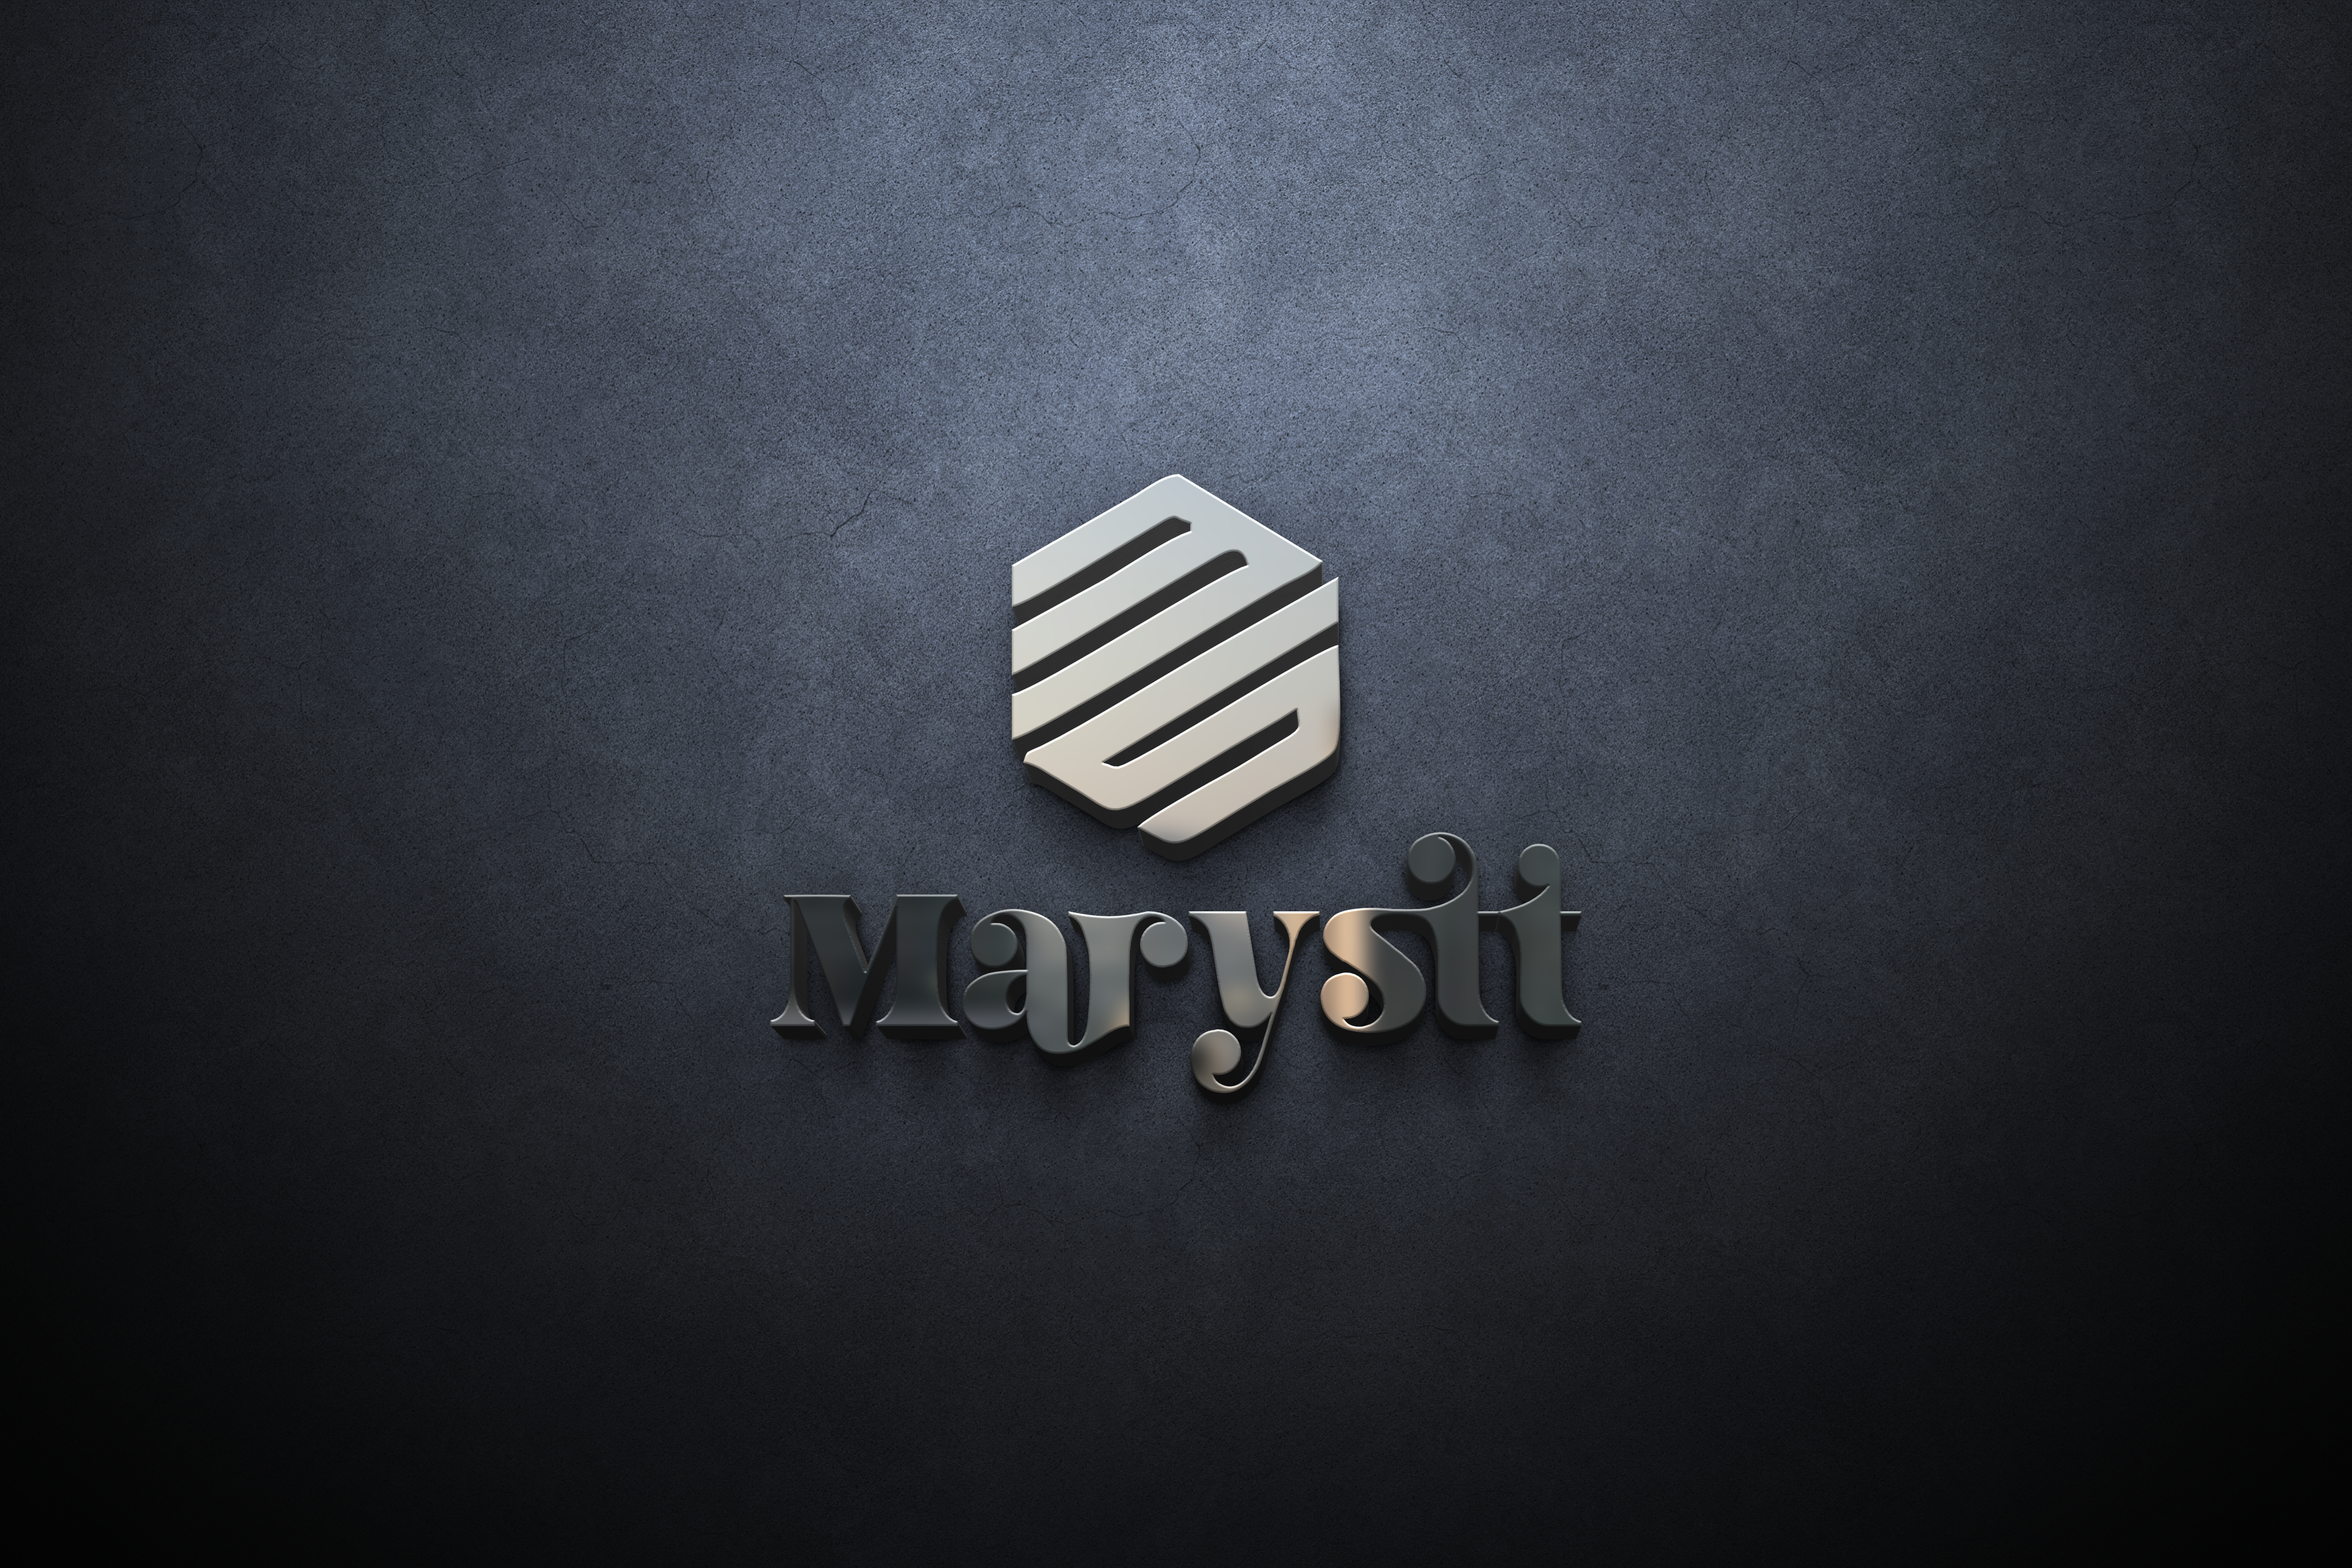 marystt_1.png